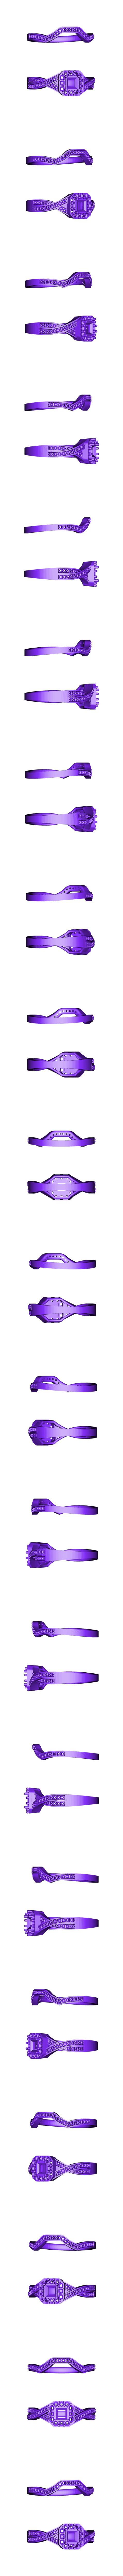 RG26389.stl Download STL file 3D Jewelry CAD File Wedding Bridal Ring Set • Design to 3D print, VR3D